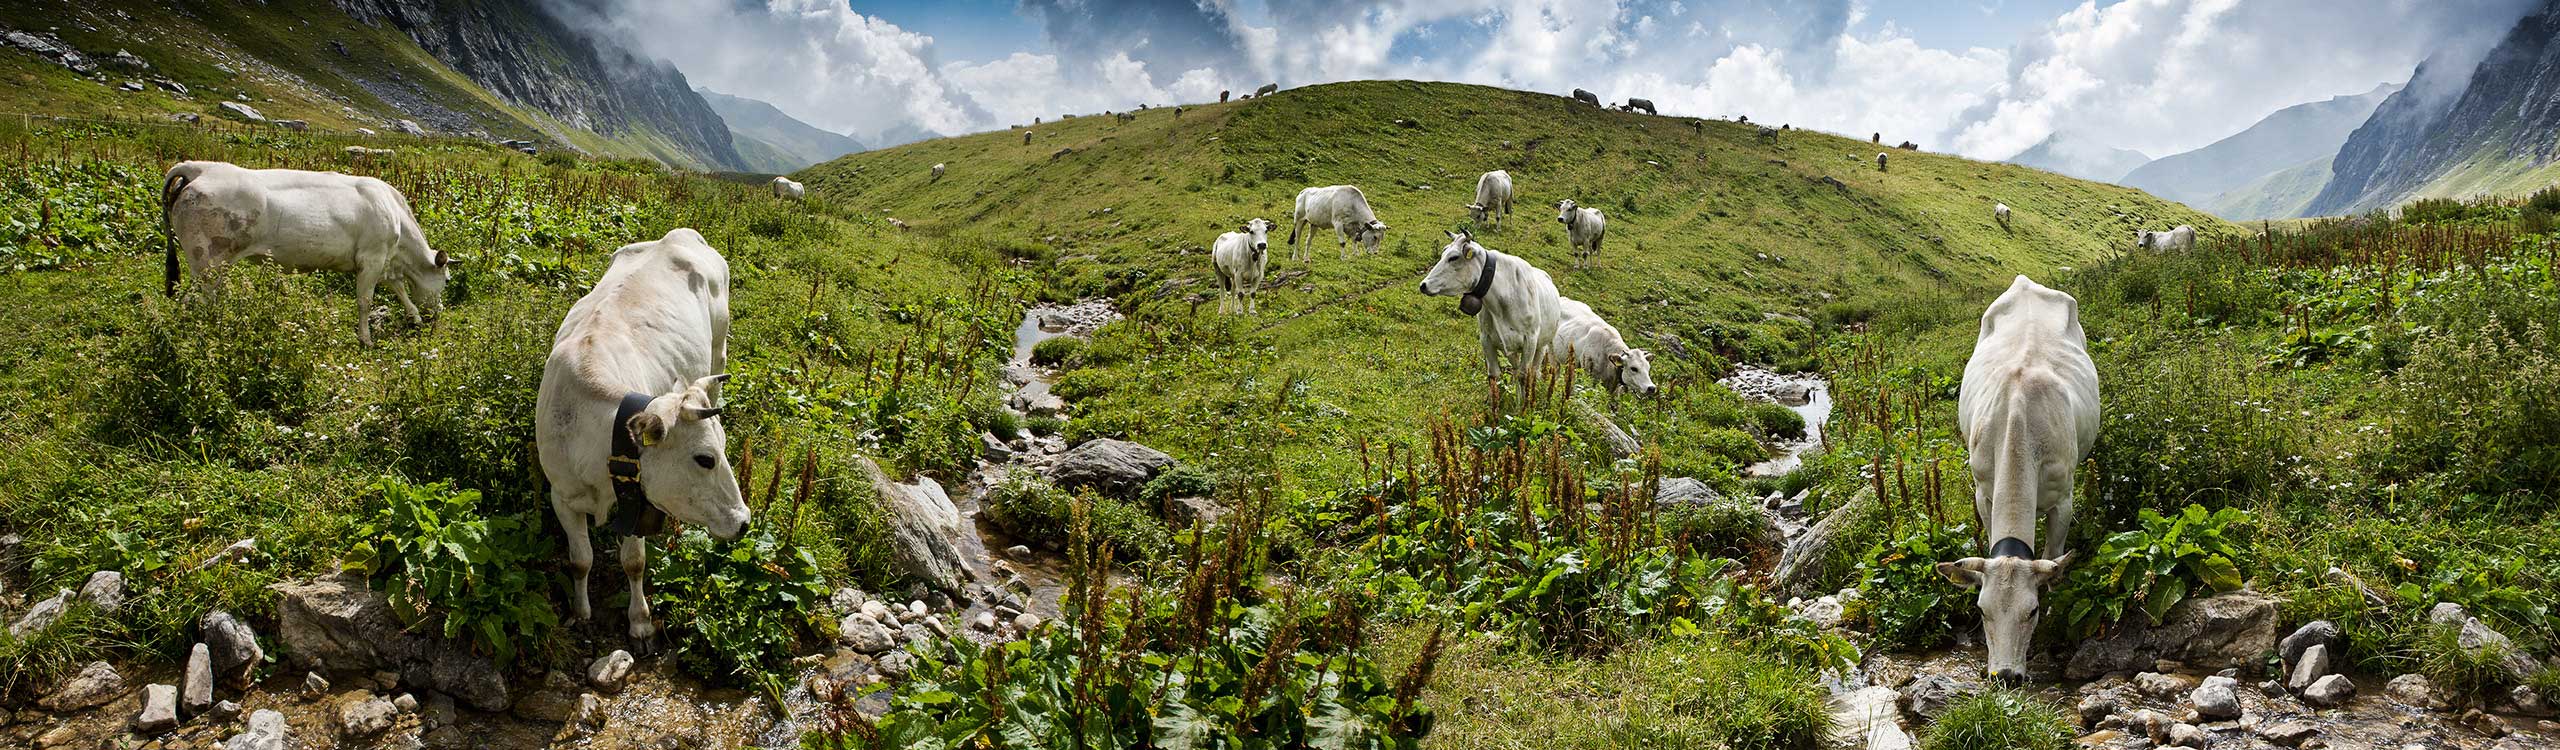 cows mountain pastures